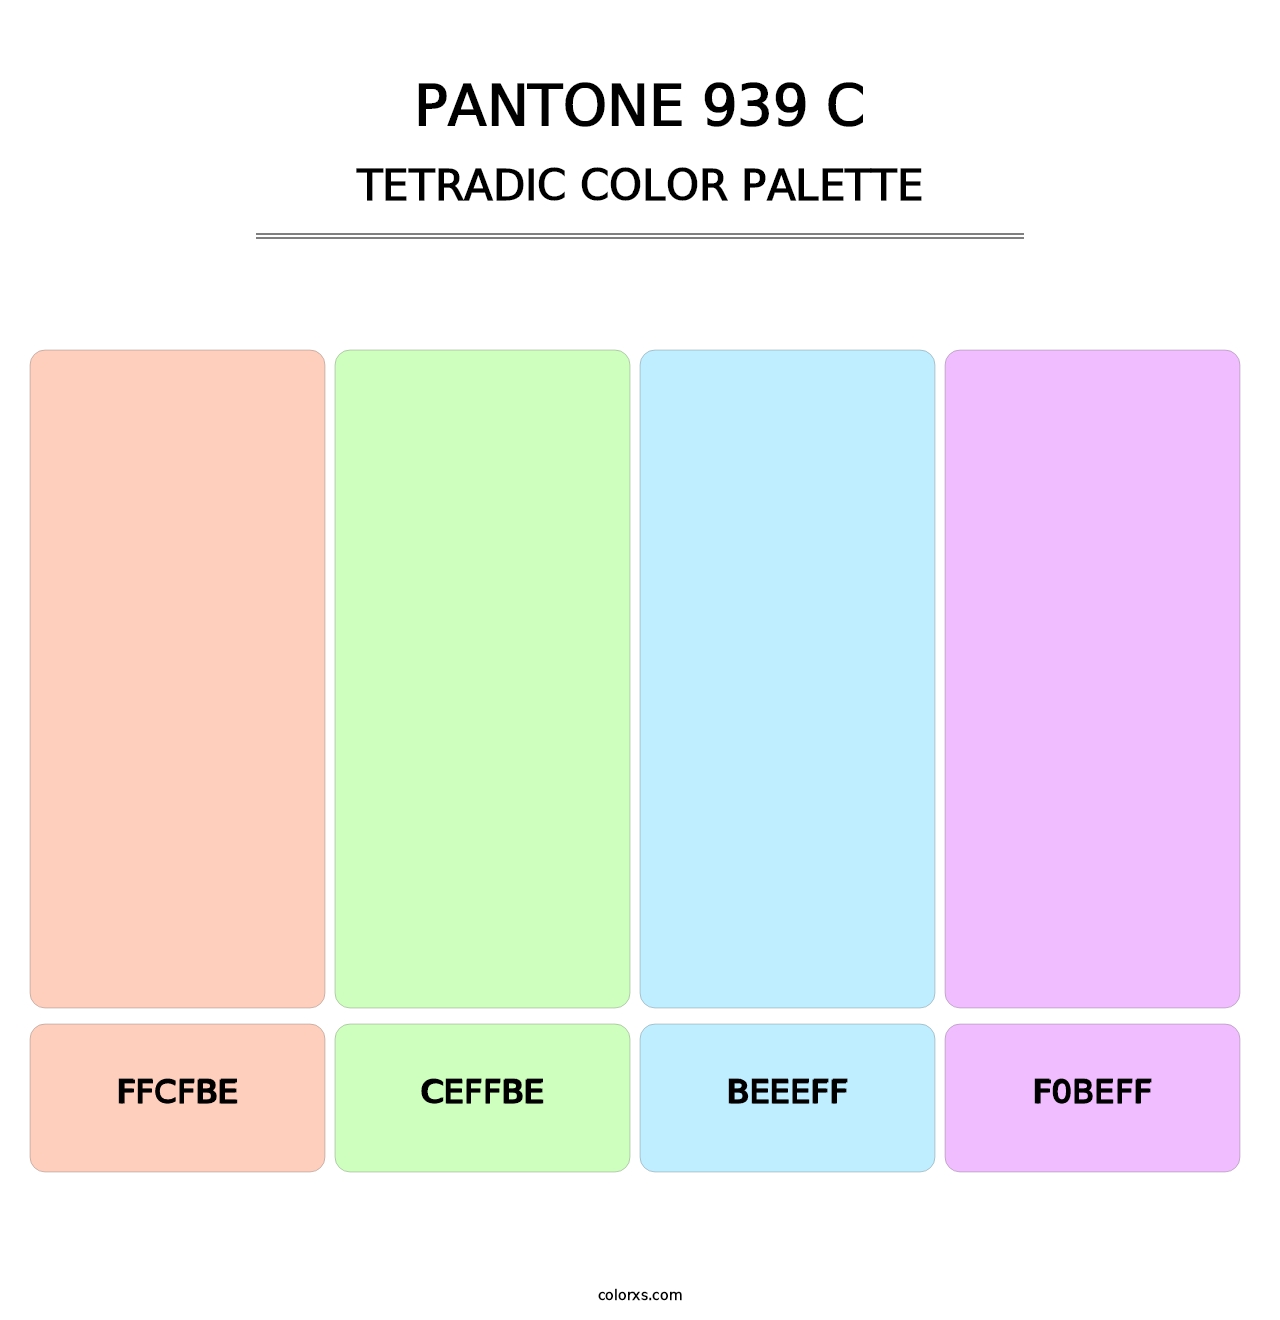 PANTONE 939 C - Tetradic Color Palette